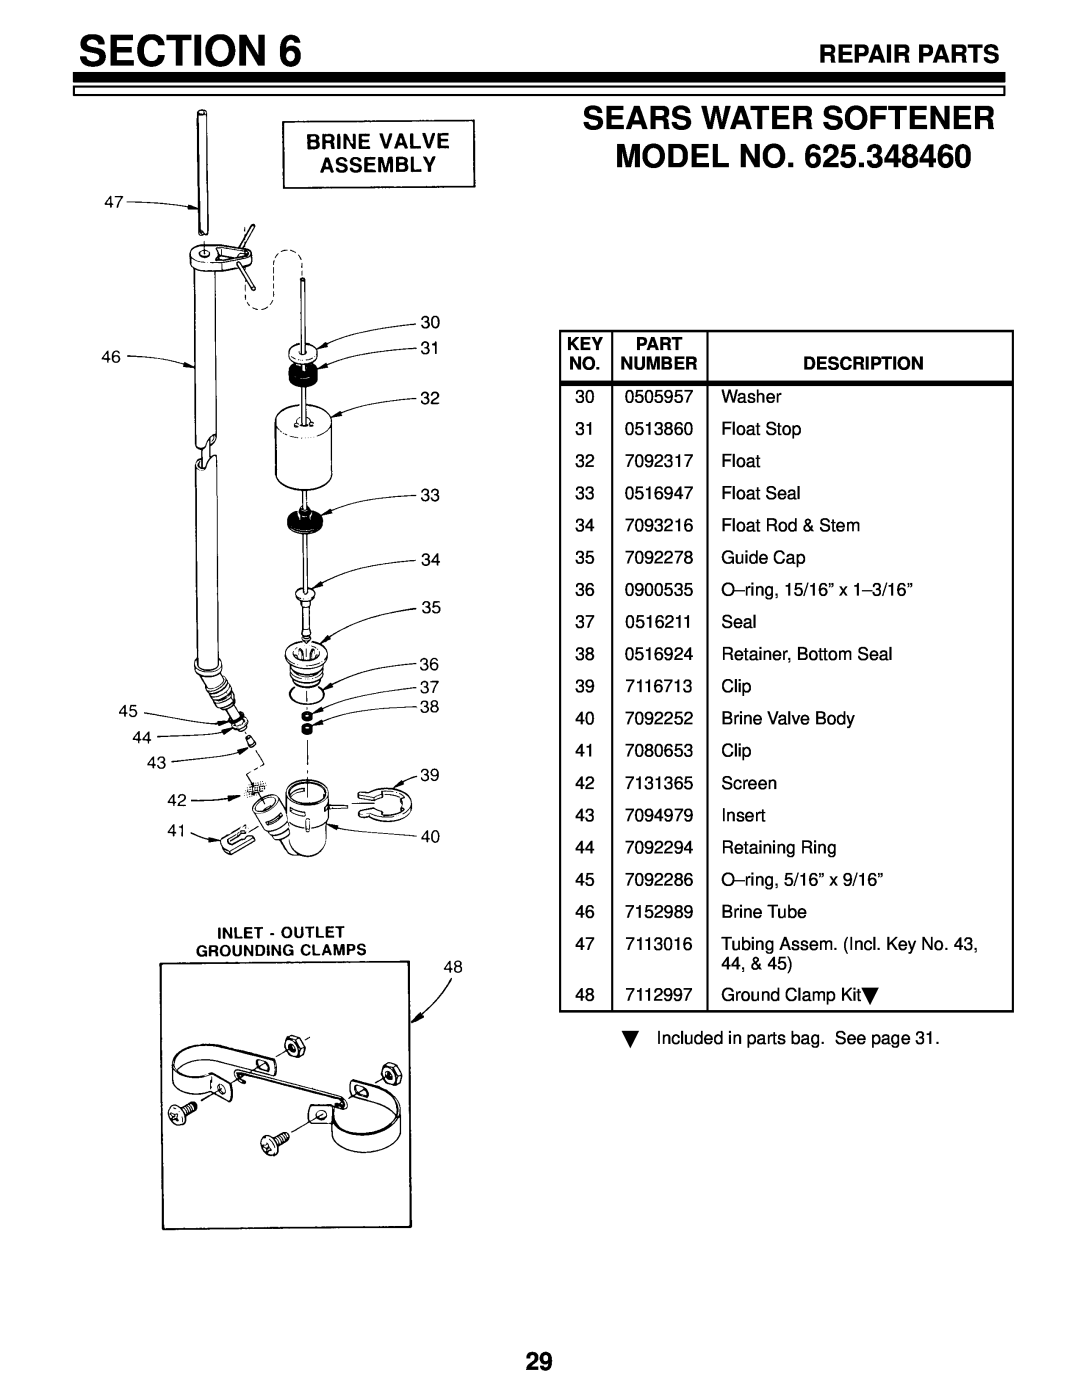 Kenmore 625.348460 owner manual Sears Water Softener Model No, Section, Repair Parts, Number, Description 